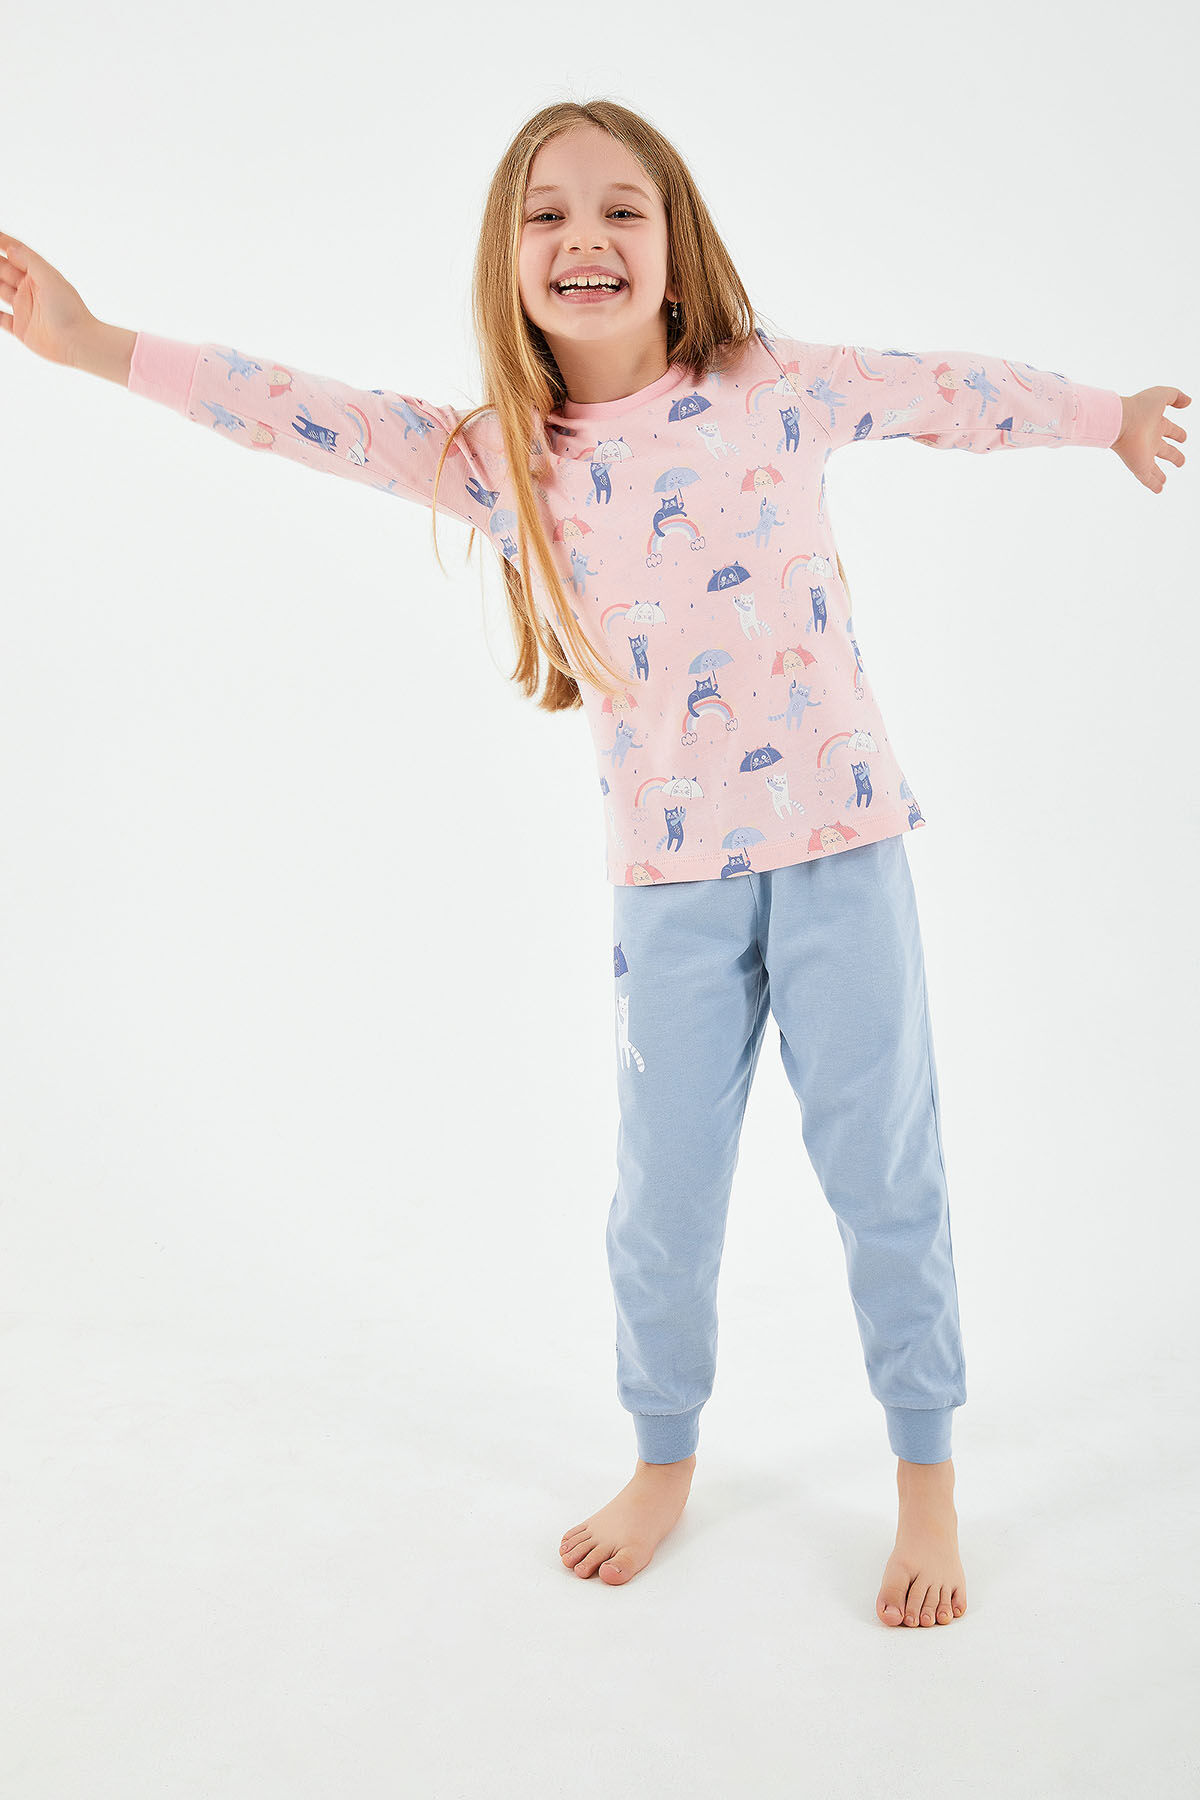 RolyPoly - RolyPoly Rainbow Pembe Kız Çocuk Uzun Kol Pijama Takım (1)